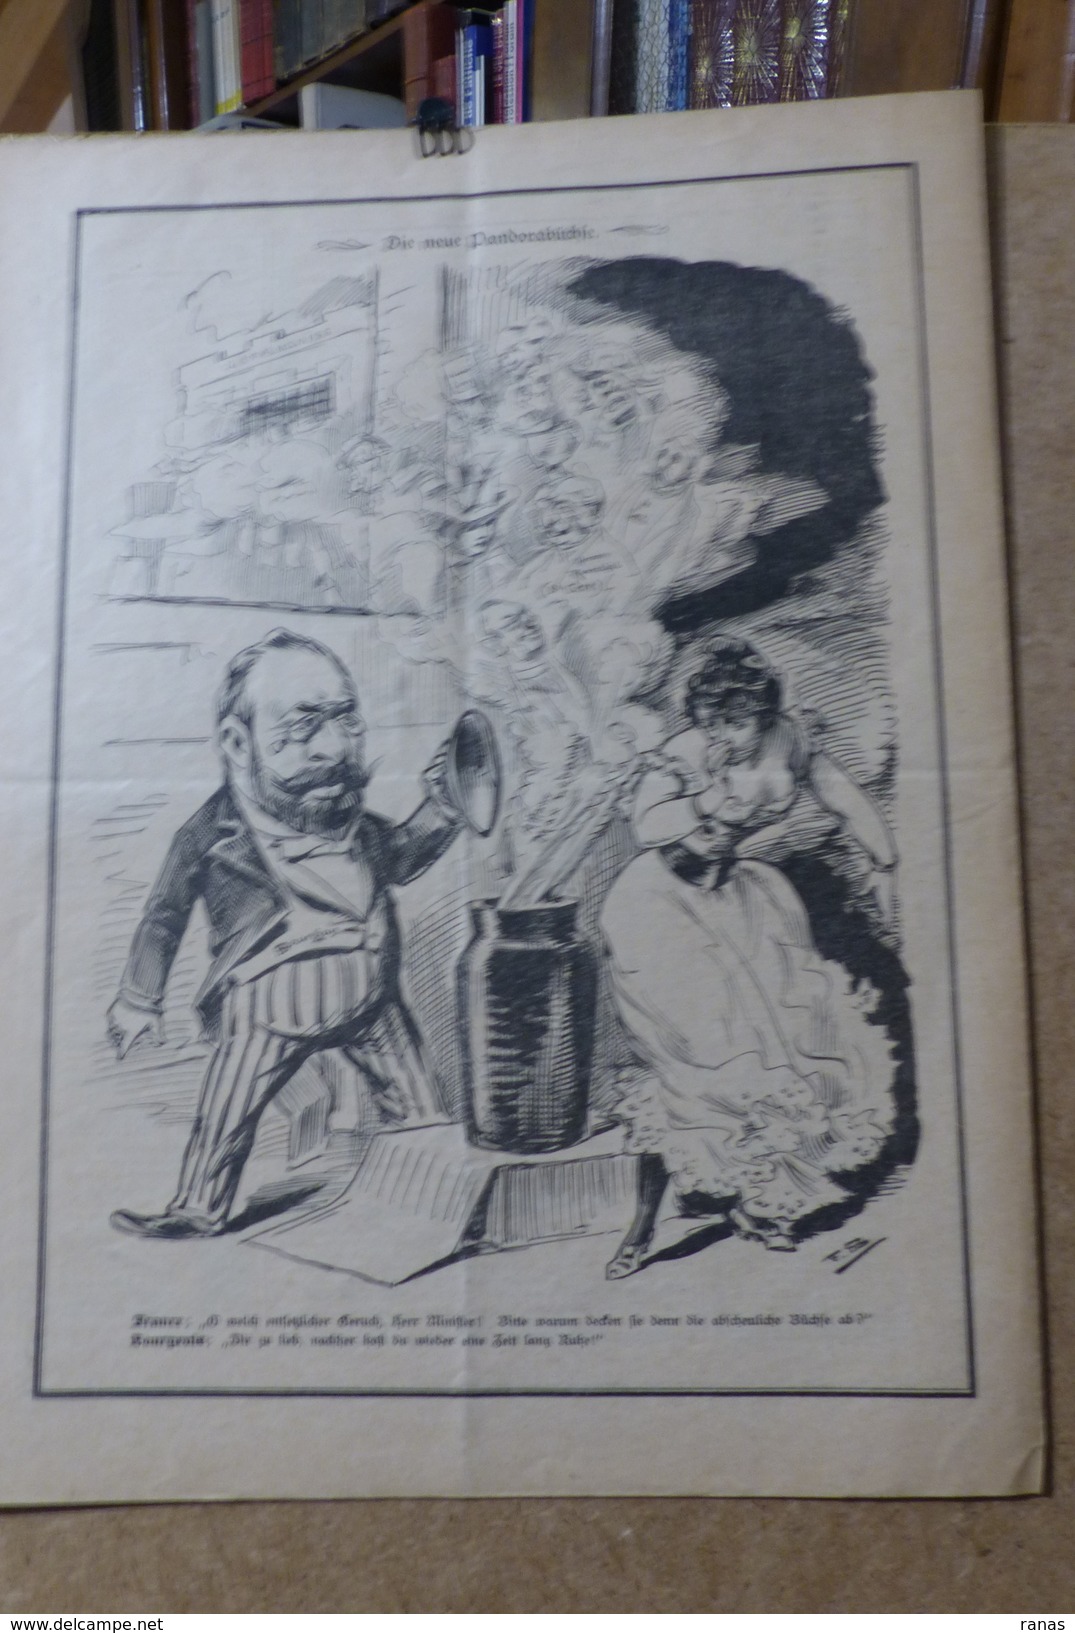 Revue Journal NEBELSPALTER Satirique Caricature 36 X 27,5 Germany Allemagne Bismarck N° 4 De 1896 Marianne Bourgeois - 1850 - 1899